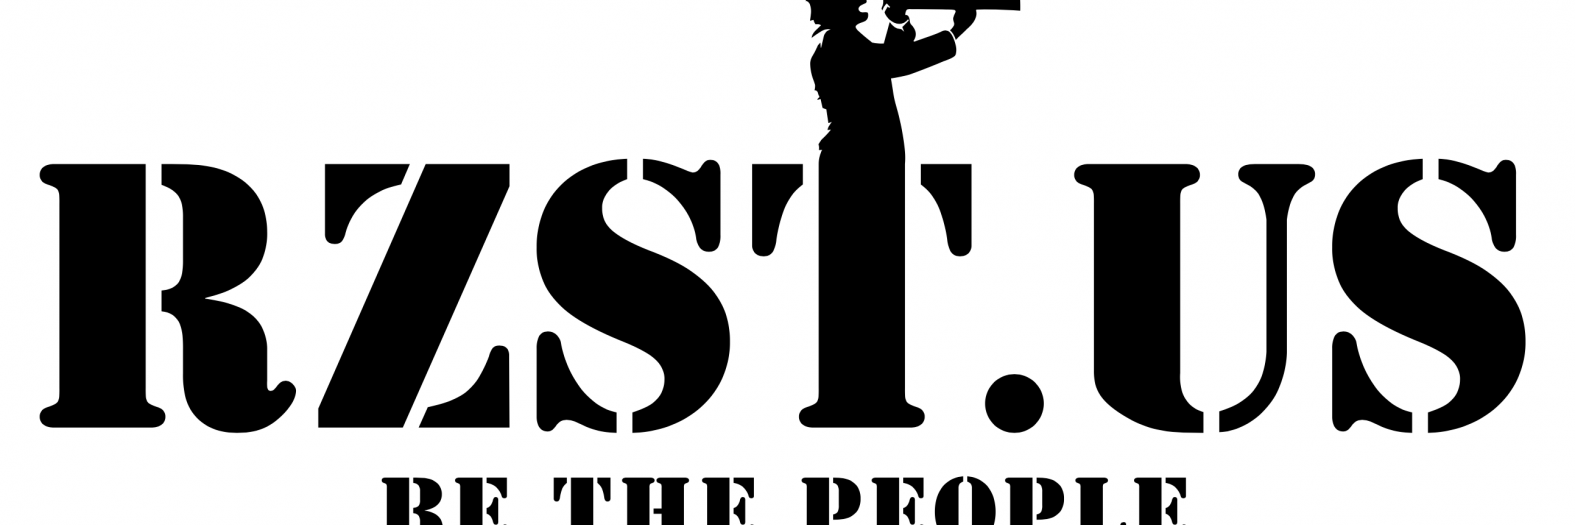 RZST Logo with Slogan